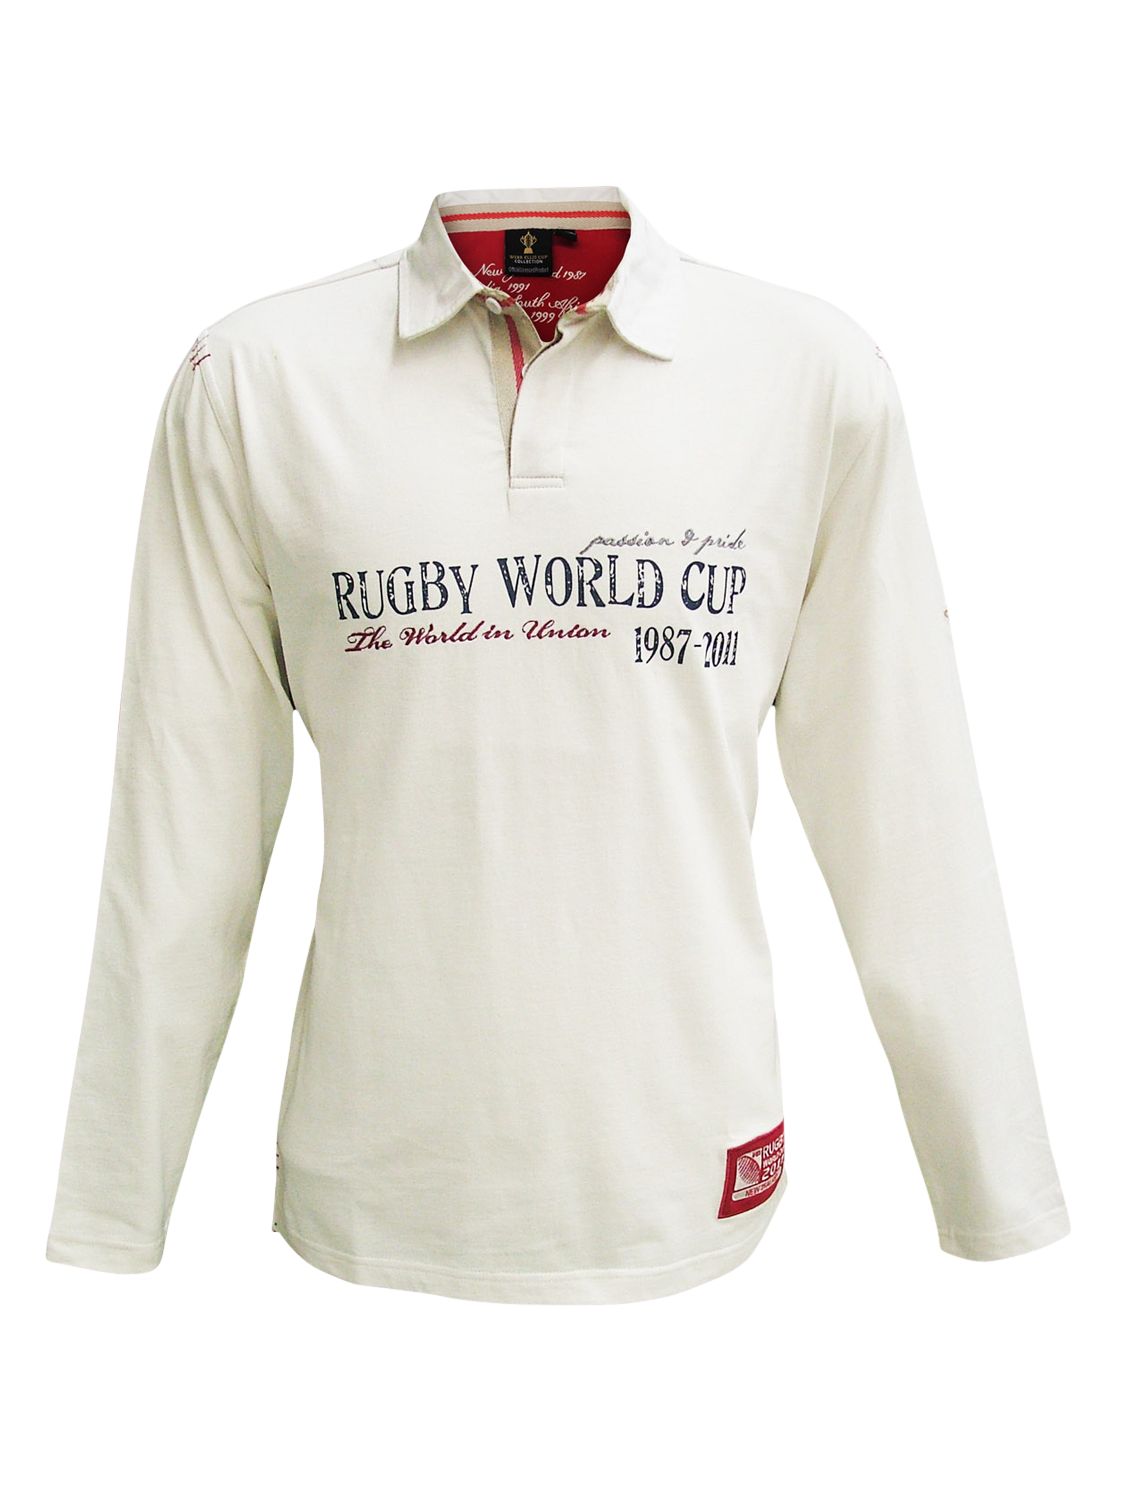 Rugby World Cup Webb Ellis Heritage Rugby Shirt,